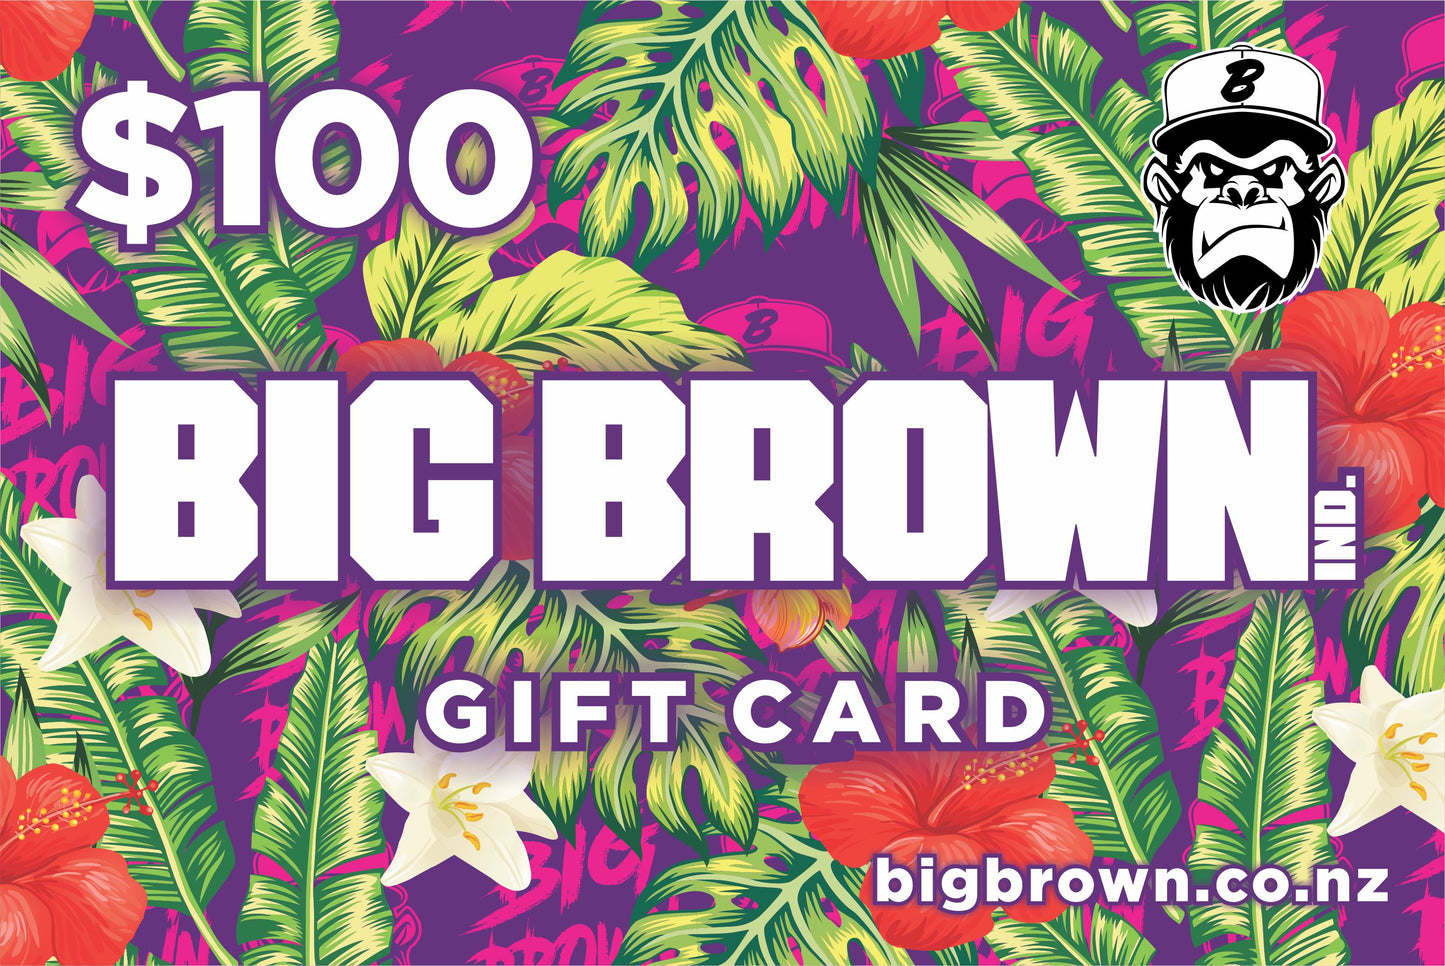 Gift Card - Big Brown Industries